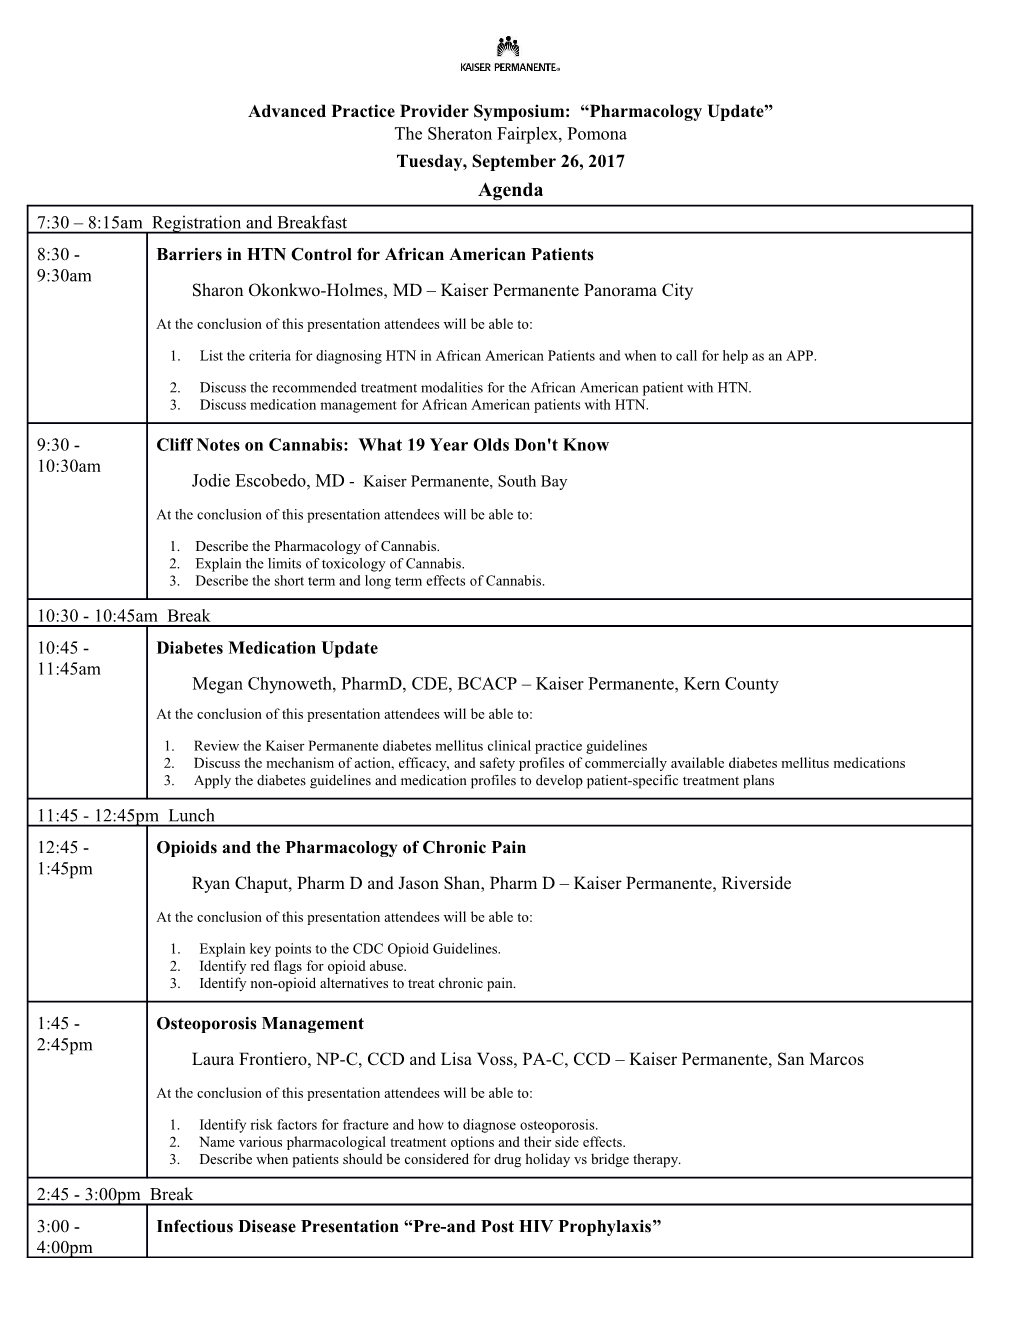 Advanced Practice Provider Symposium: Pharmacology Update